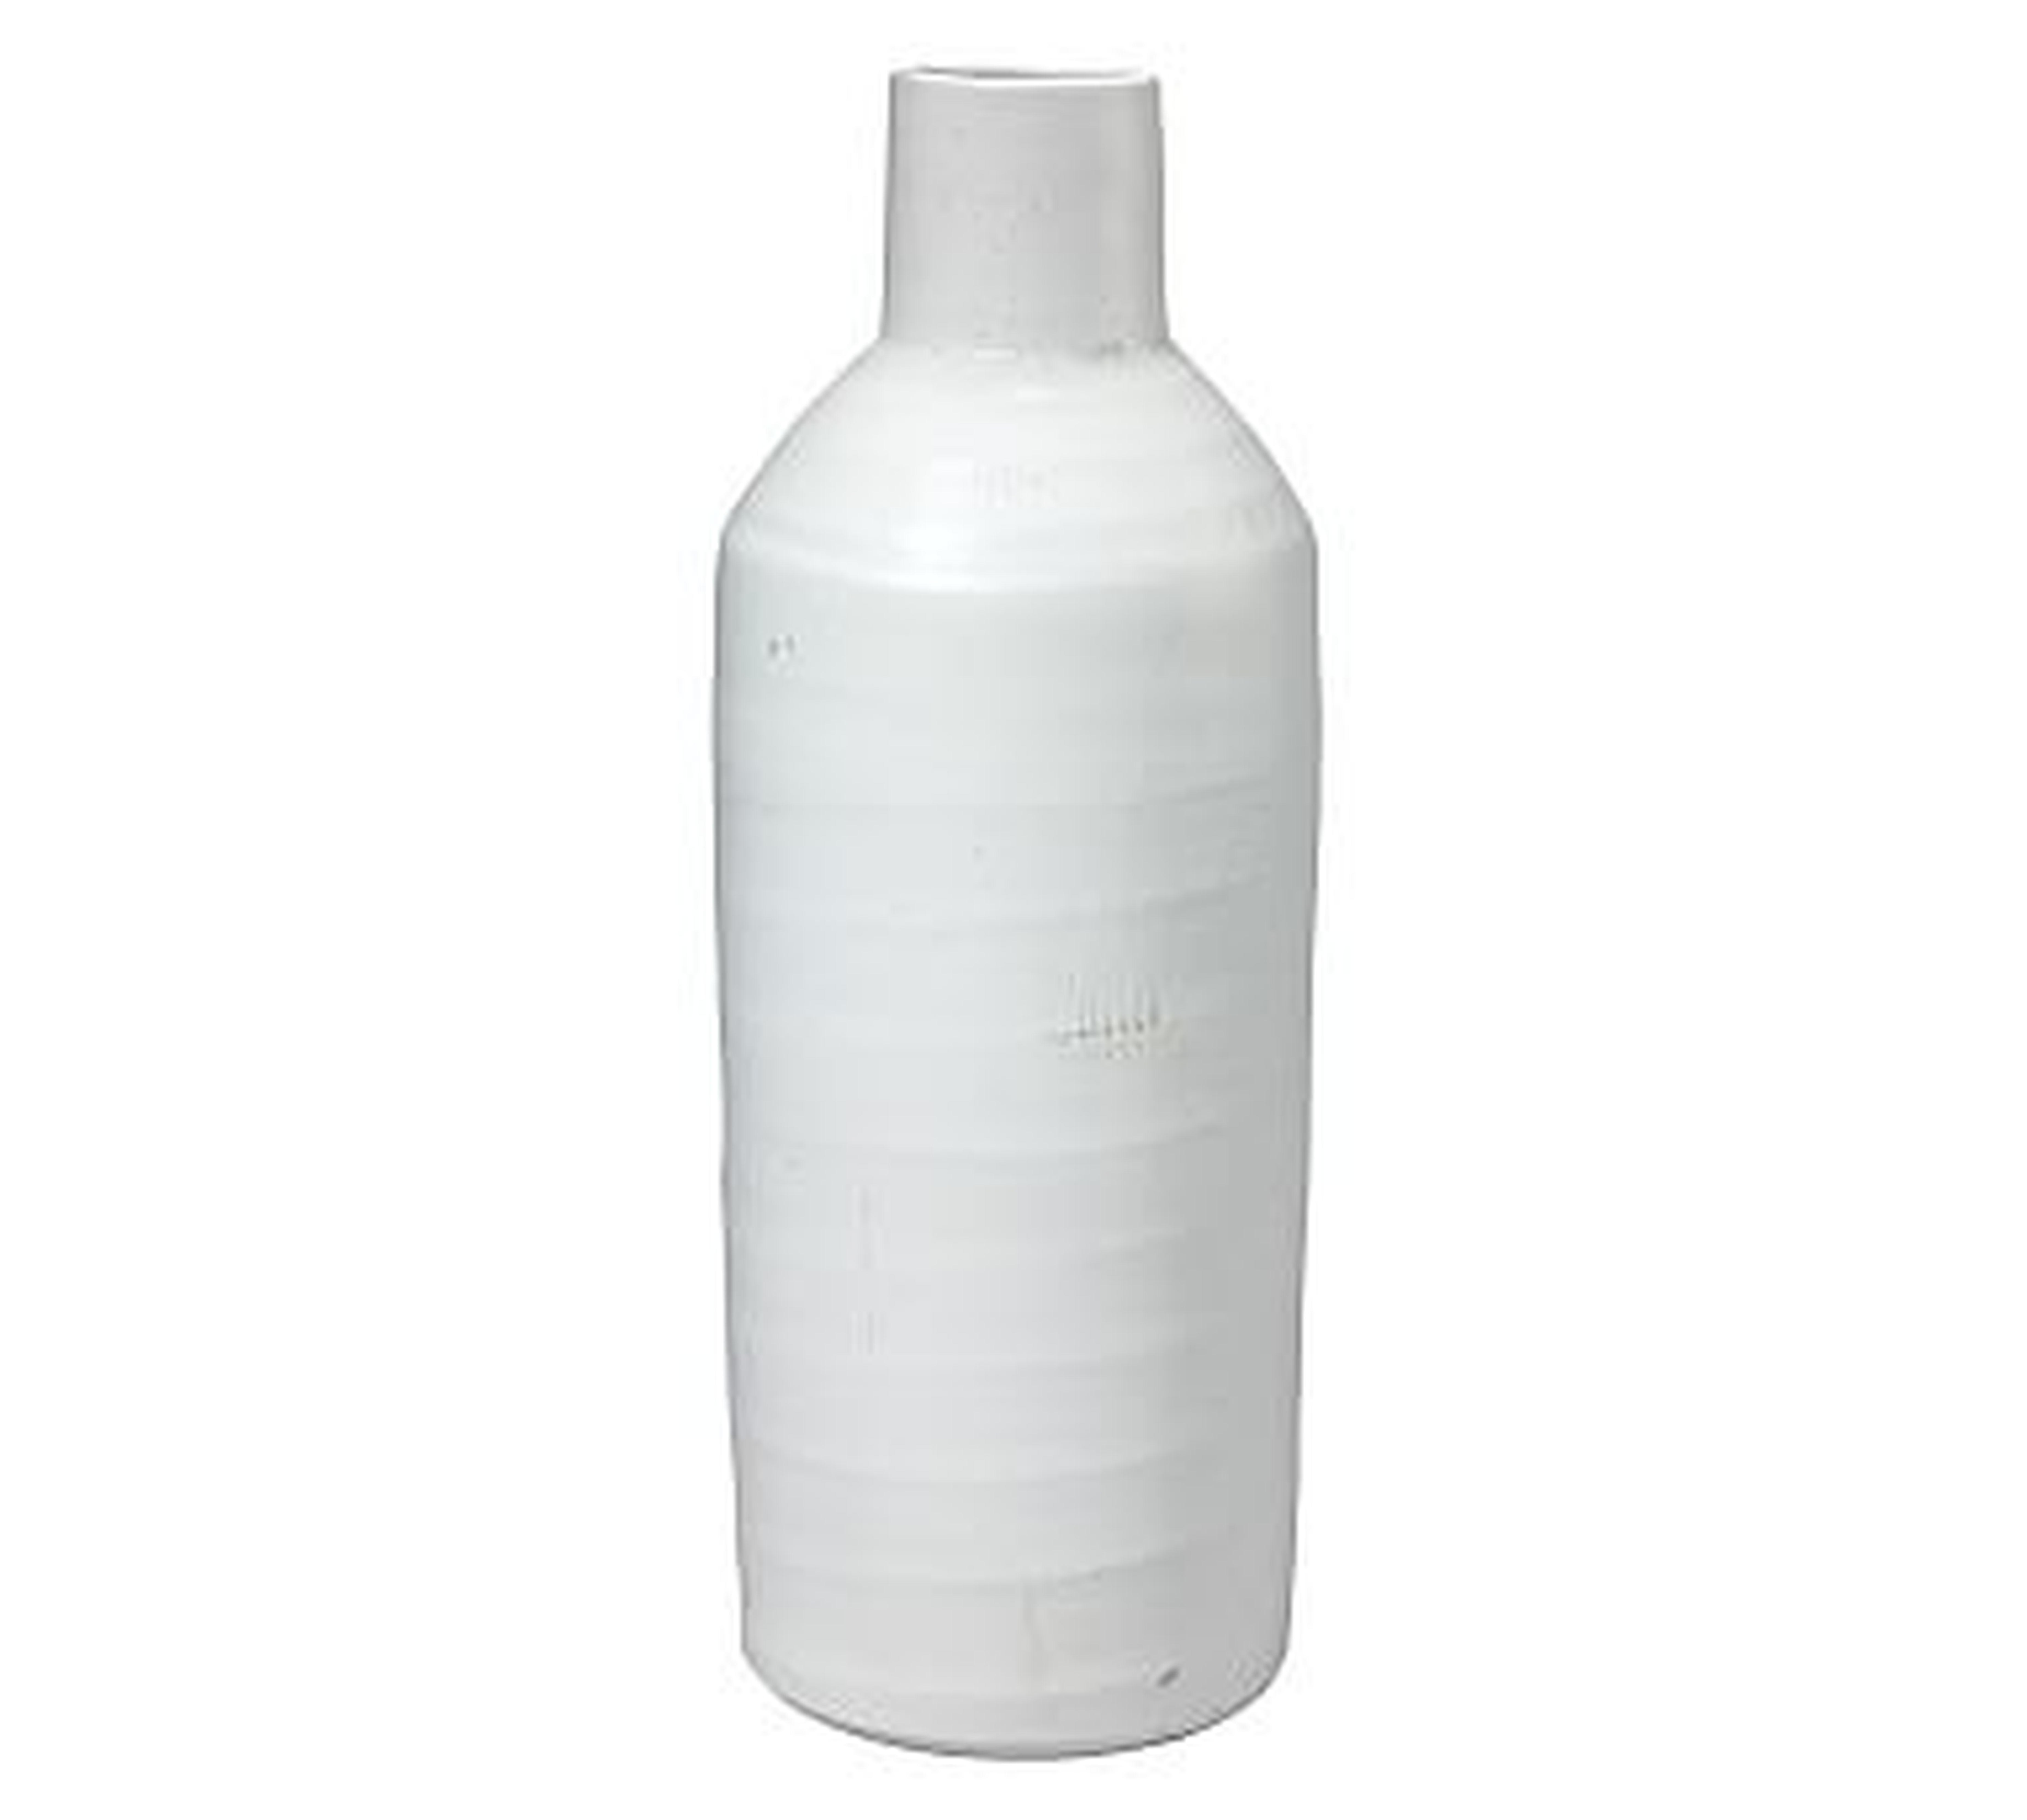 Viola Ceramic Vase, Tall, White - Pottery Barn